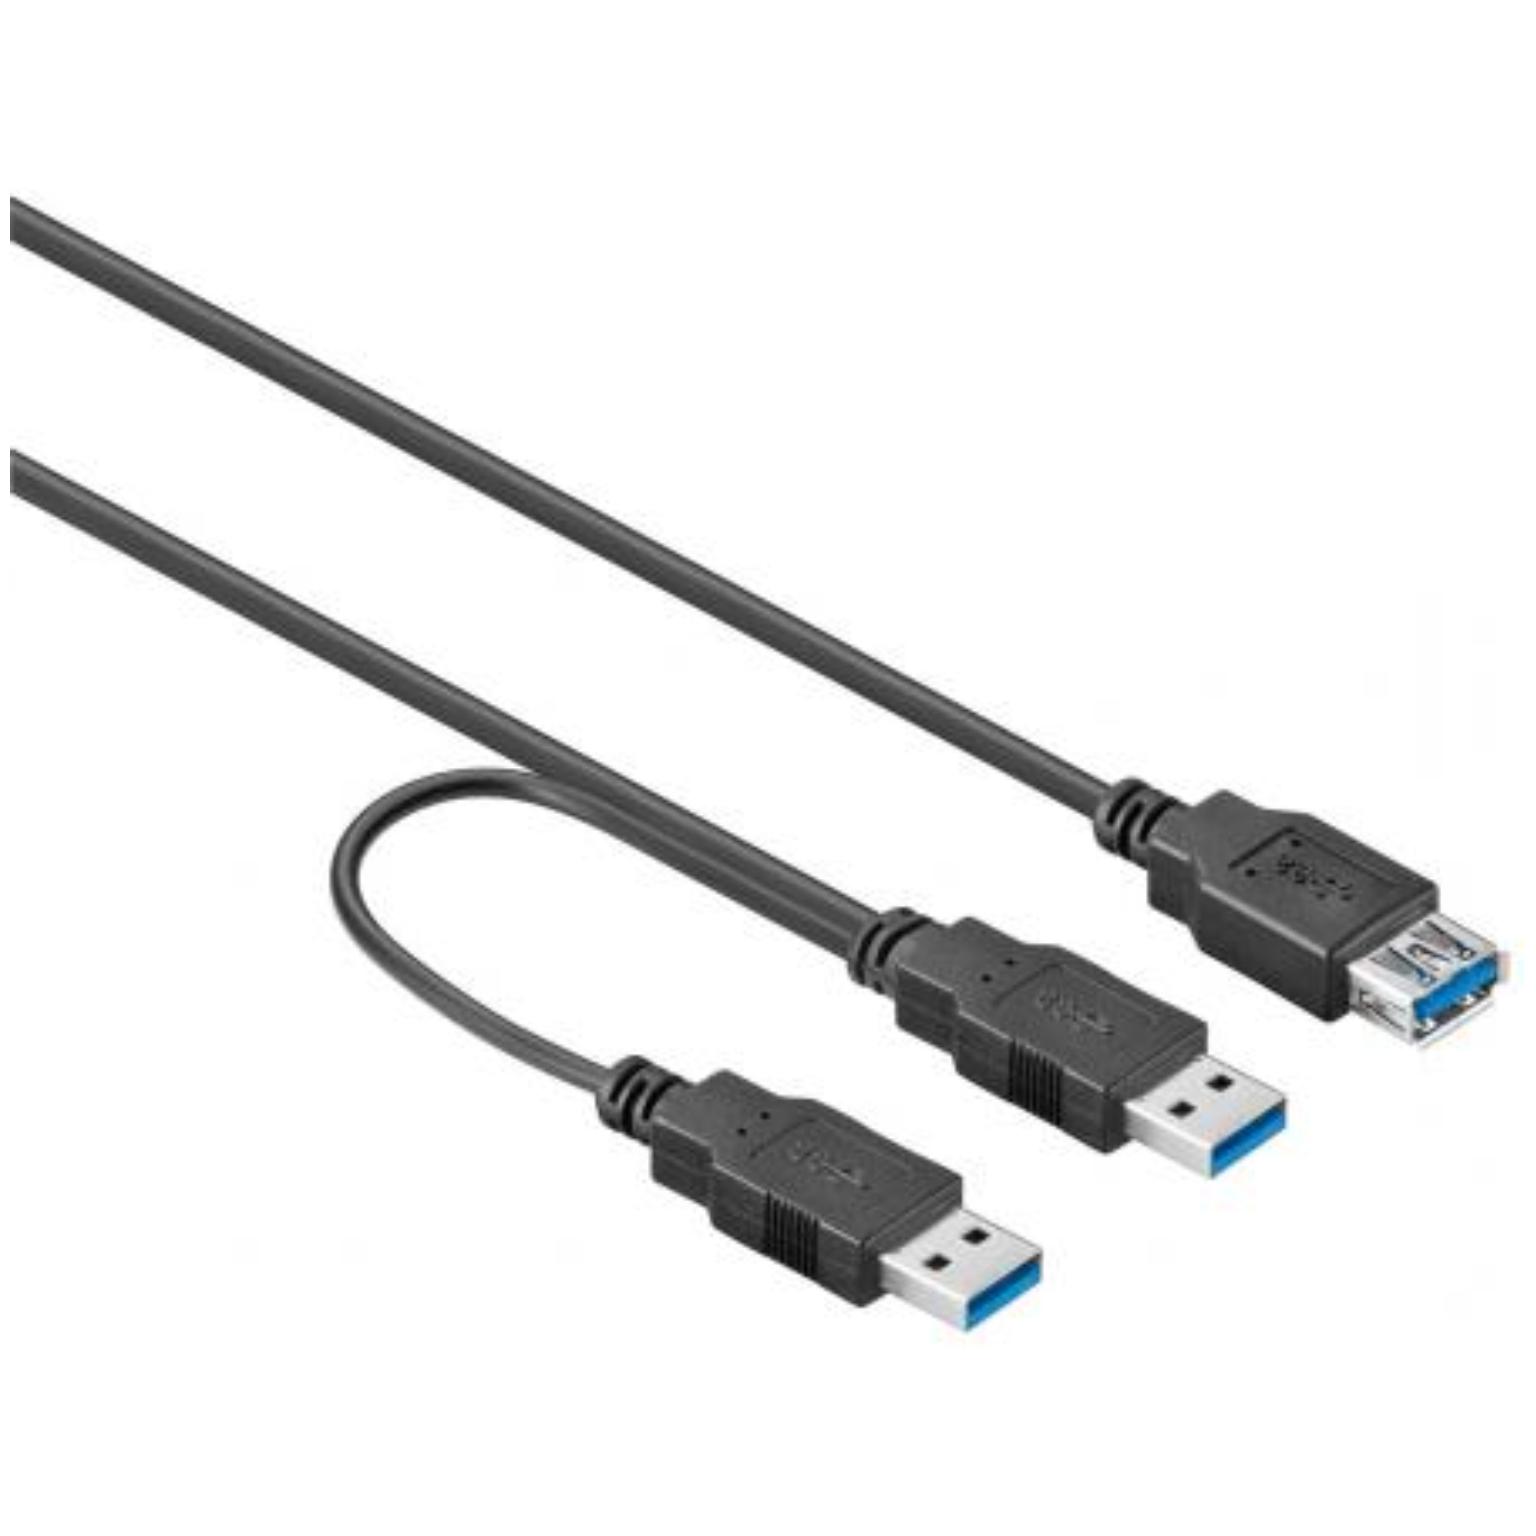 USB 3.0 Y kabel